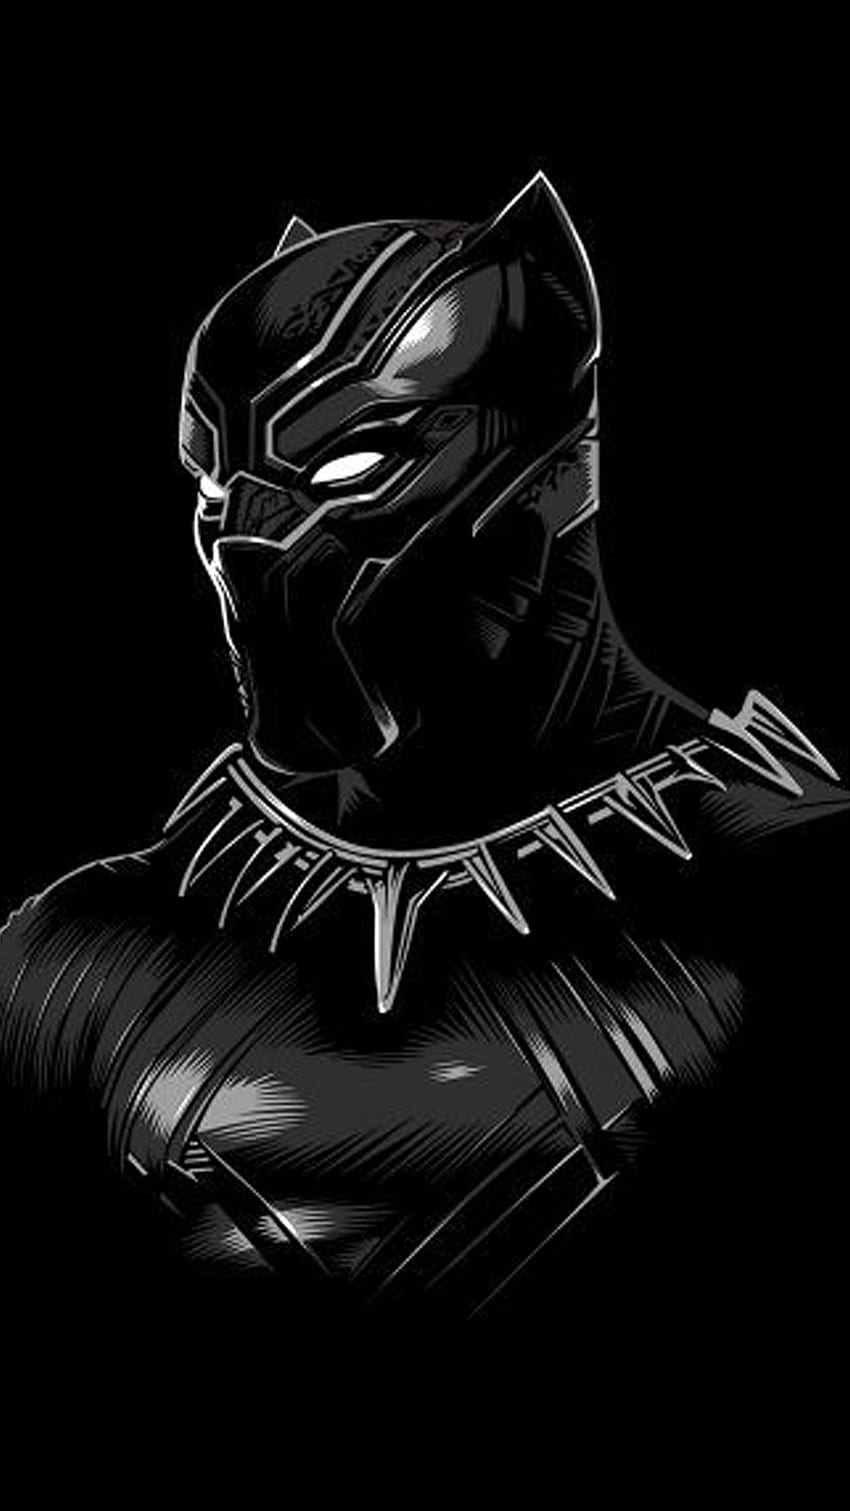 Black Panther ซูเปอร์ฮีโร่ Black Panther [] สำหรับมือถือและแท็บเล็ตของคุณ สำรวจ Black Panther Marvel Mobile Black Panther Marvel Mobile , Black Panther ซูเปอร์ฮีโร่ขาวดำ วอลล์เปเปอร์โทรศัพท์ HD